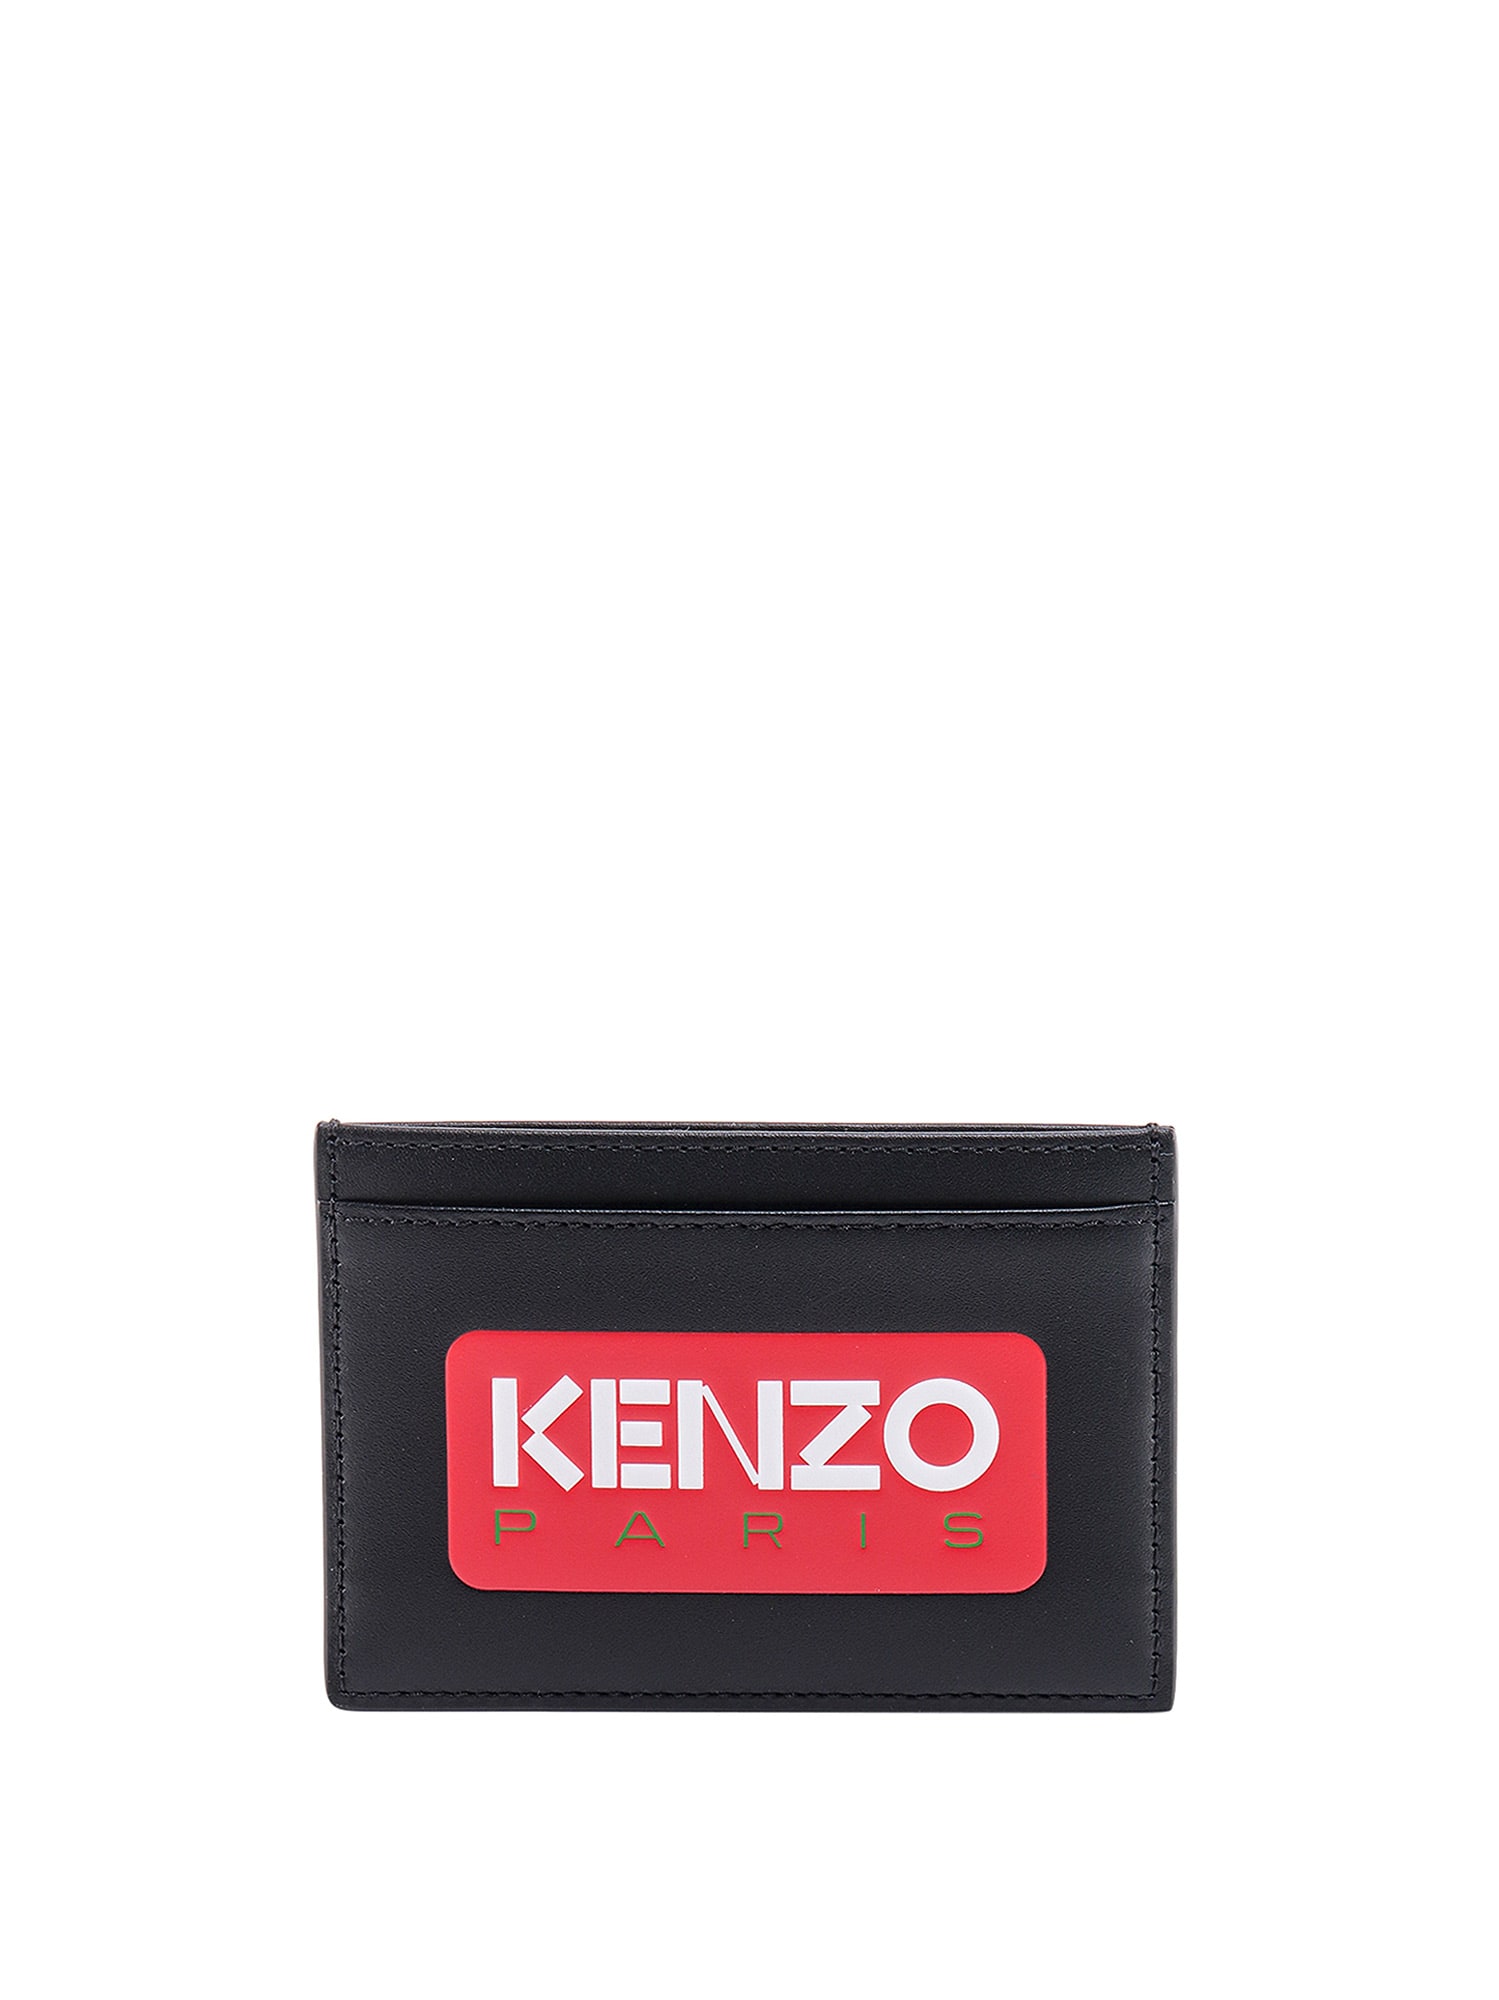 KENZO CARD HOLDER